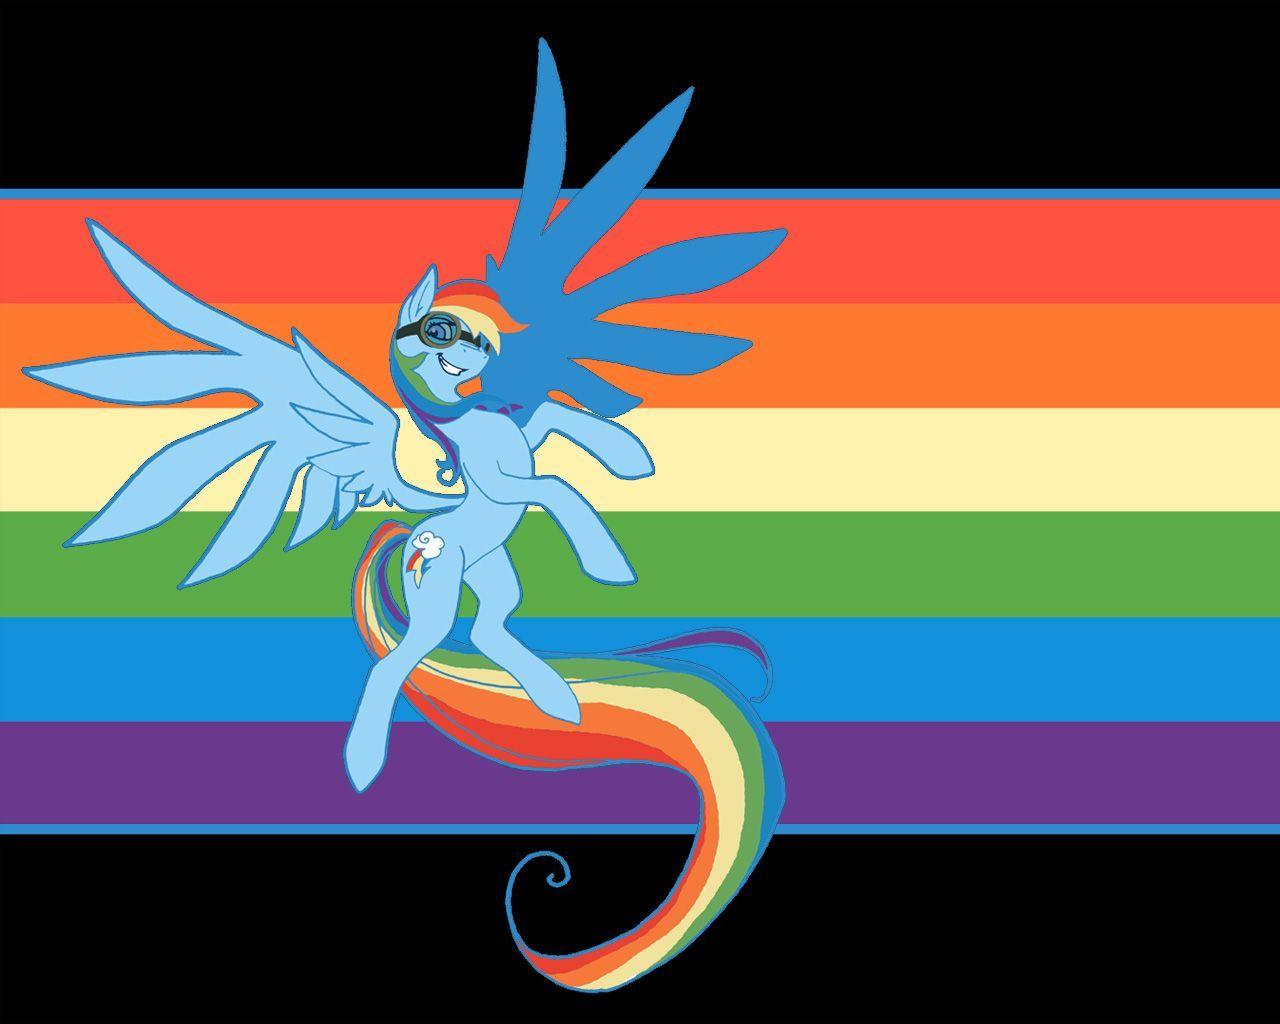 Rainbow Dash Wallpaper Little Pony Friendship is Magic